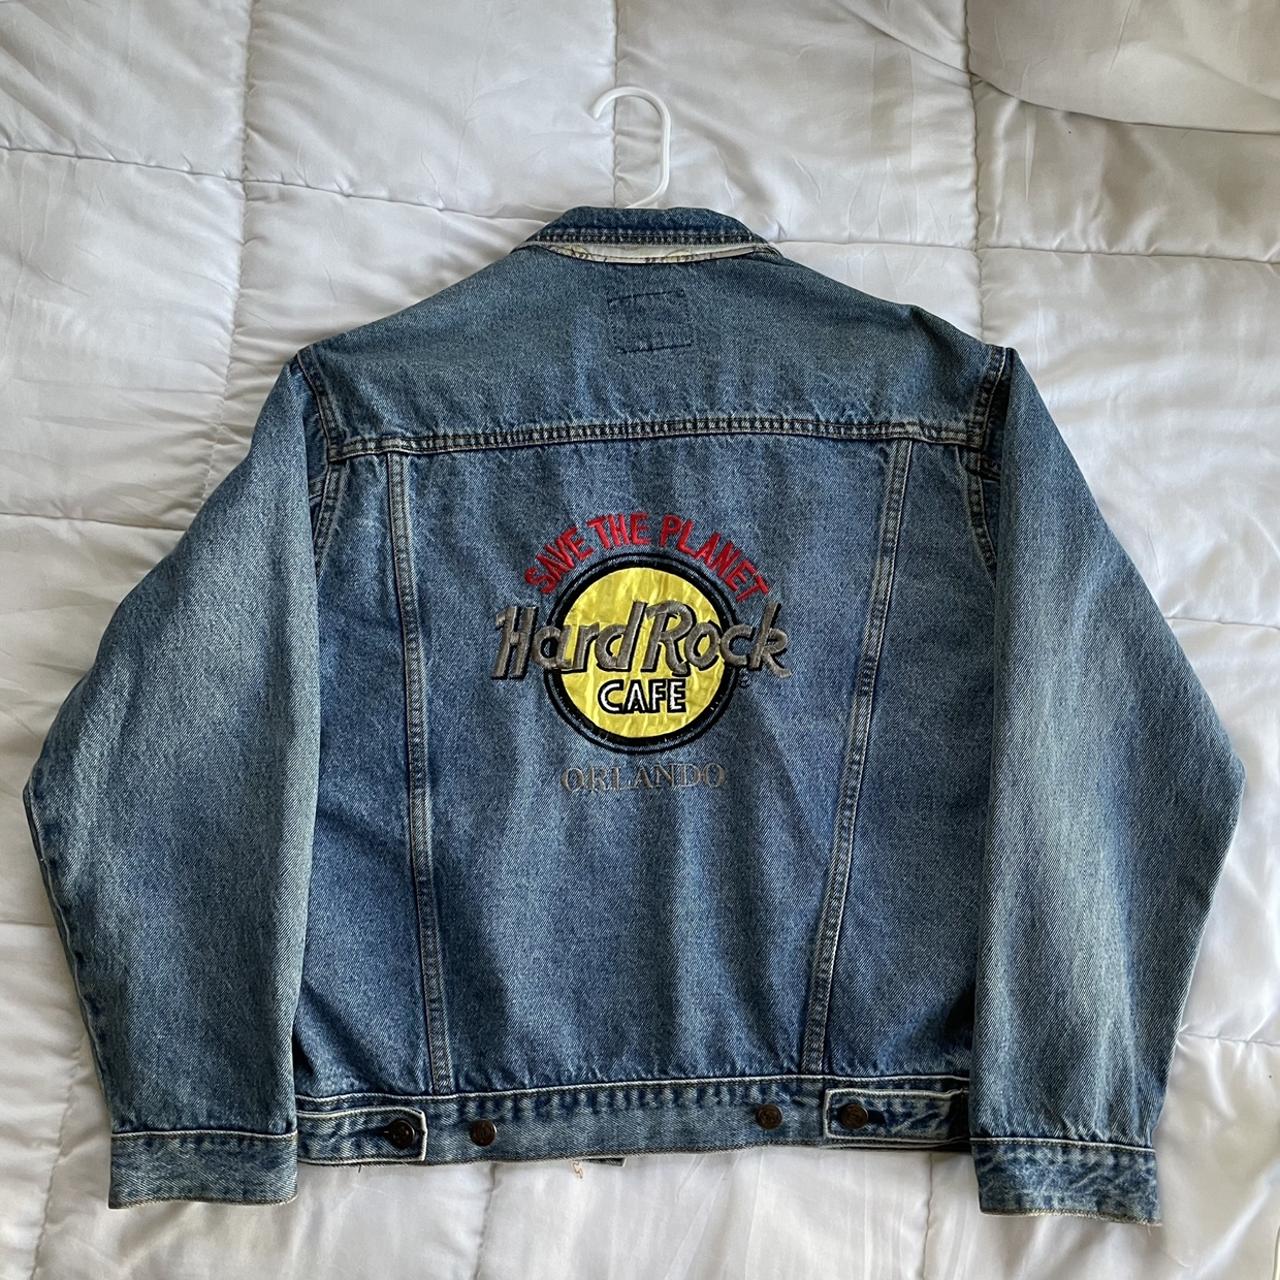 Hard Rock Cafe Men's Blue and Yellow Jacket | Depop